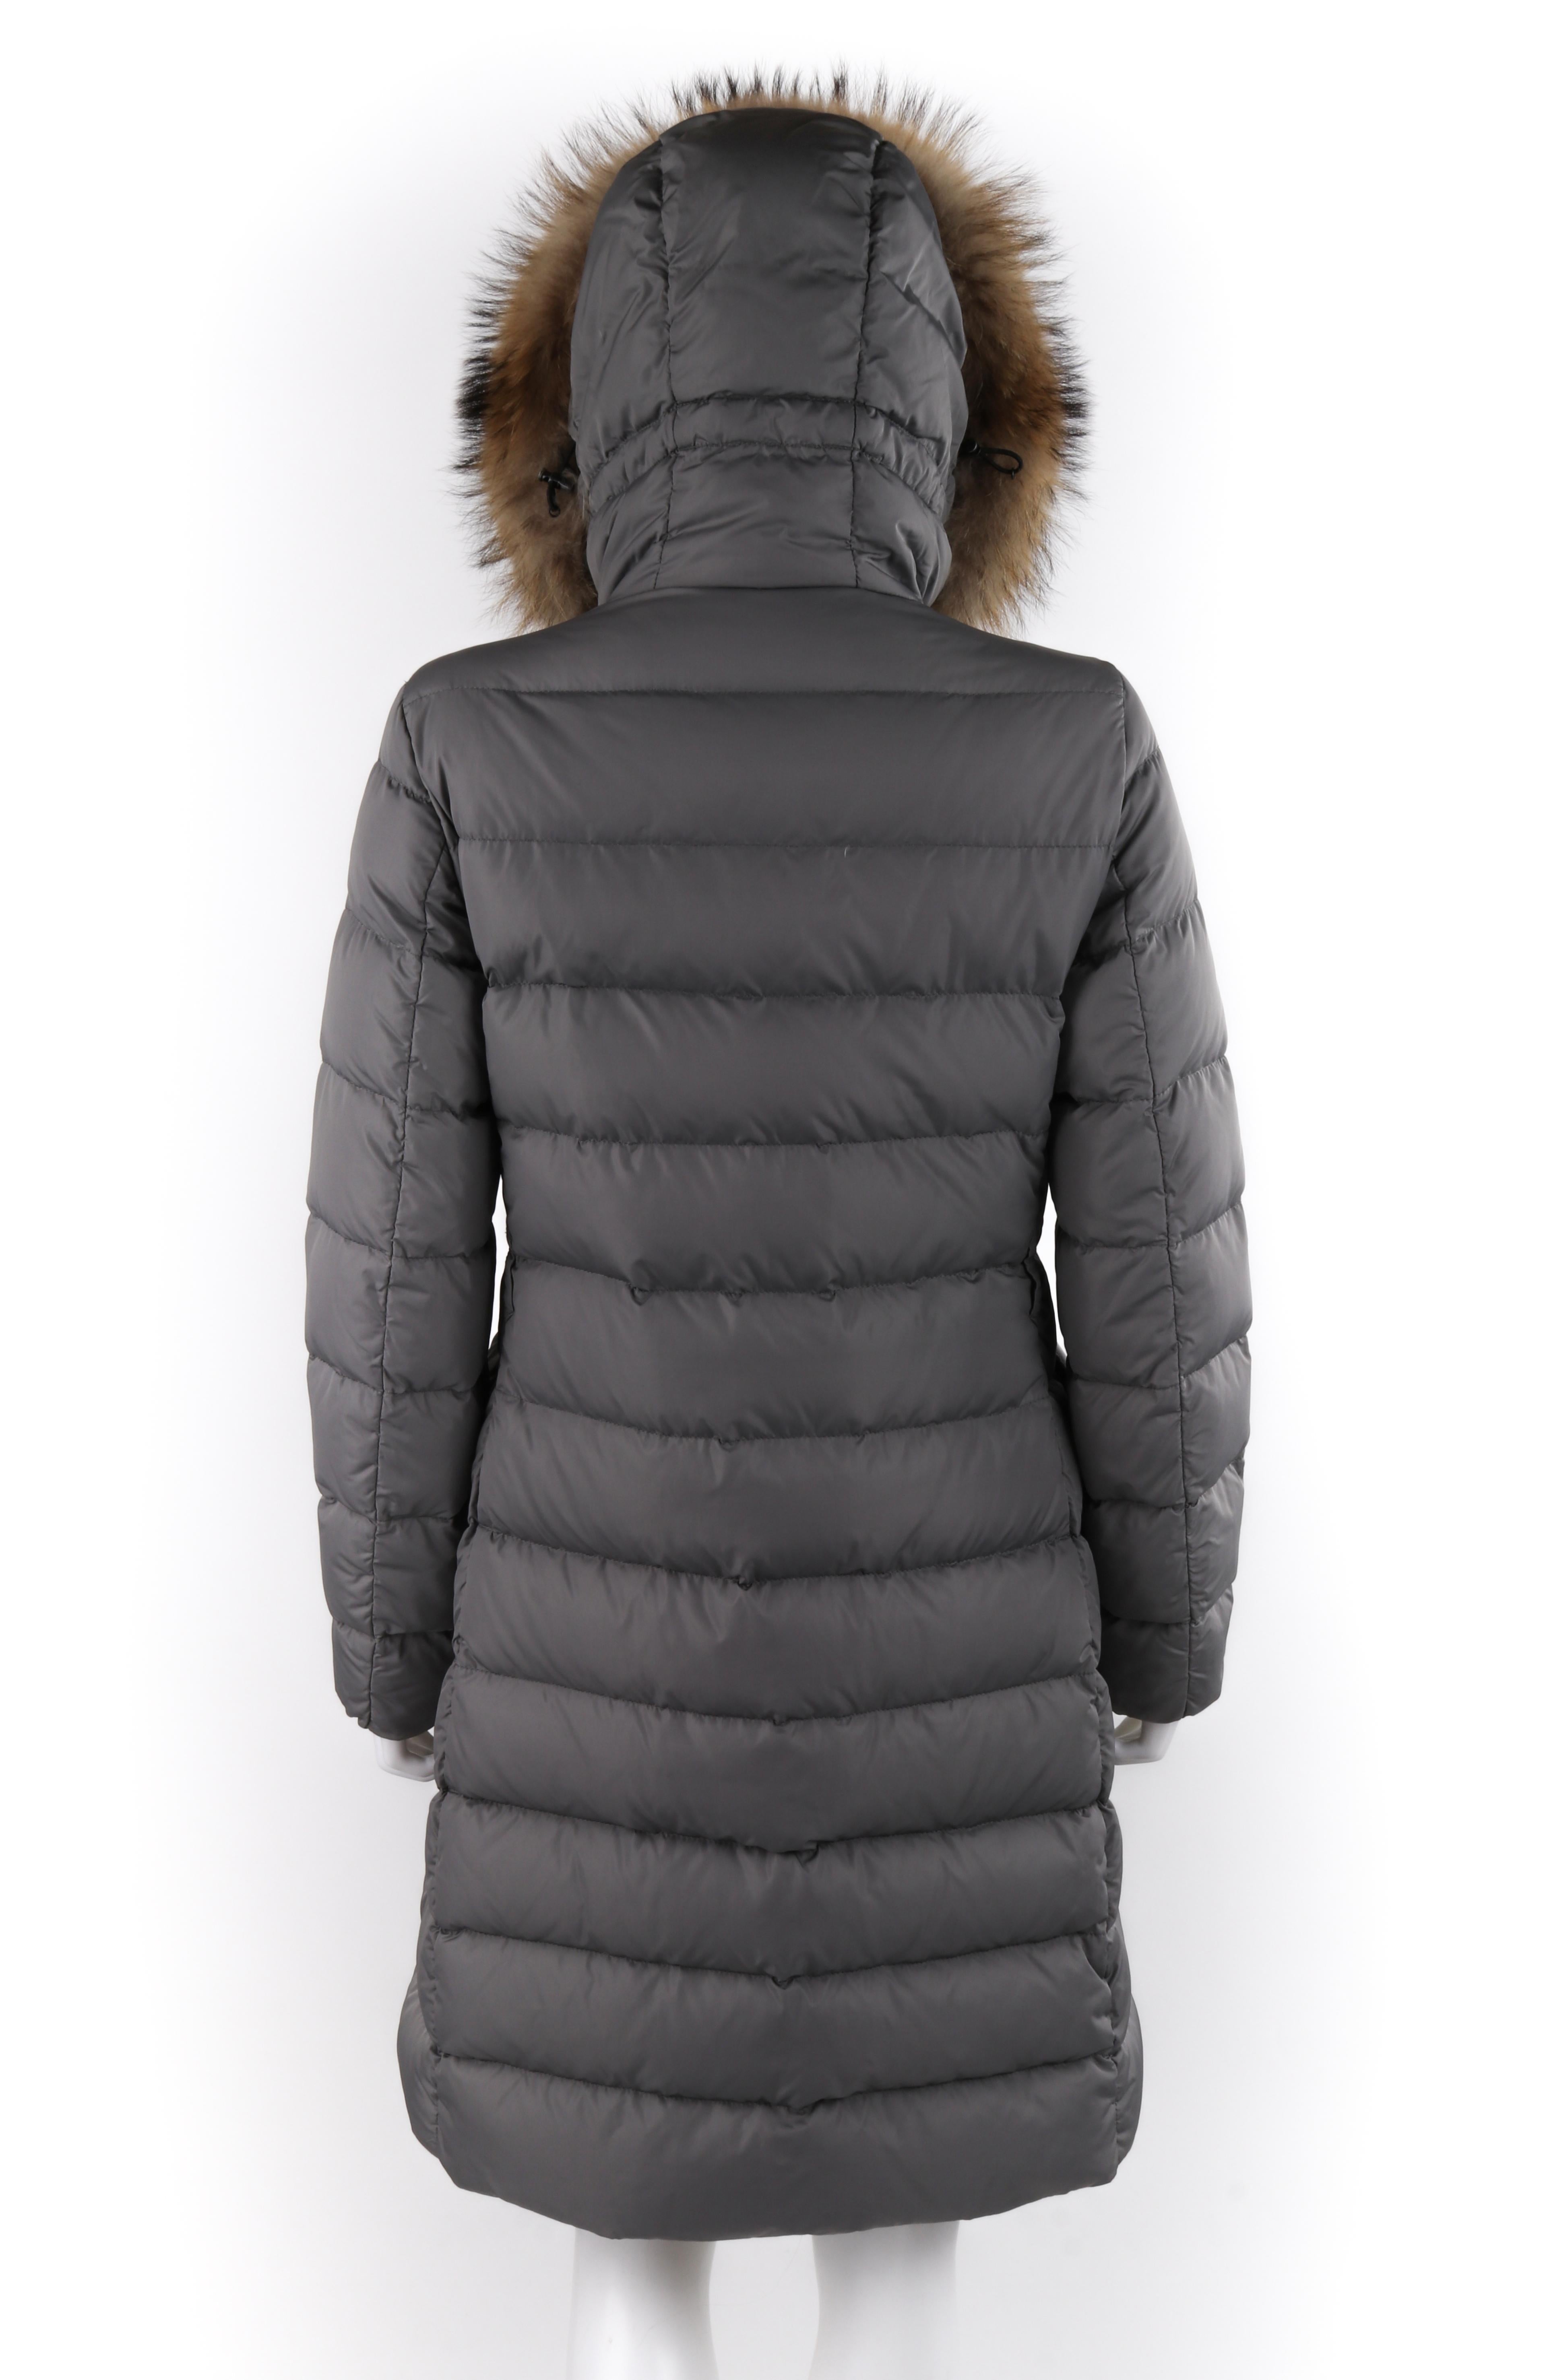 MONCLER “Genevrier” Giubbotto Gray Fur Quilted Puffer Jacket Parka Coat ...